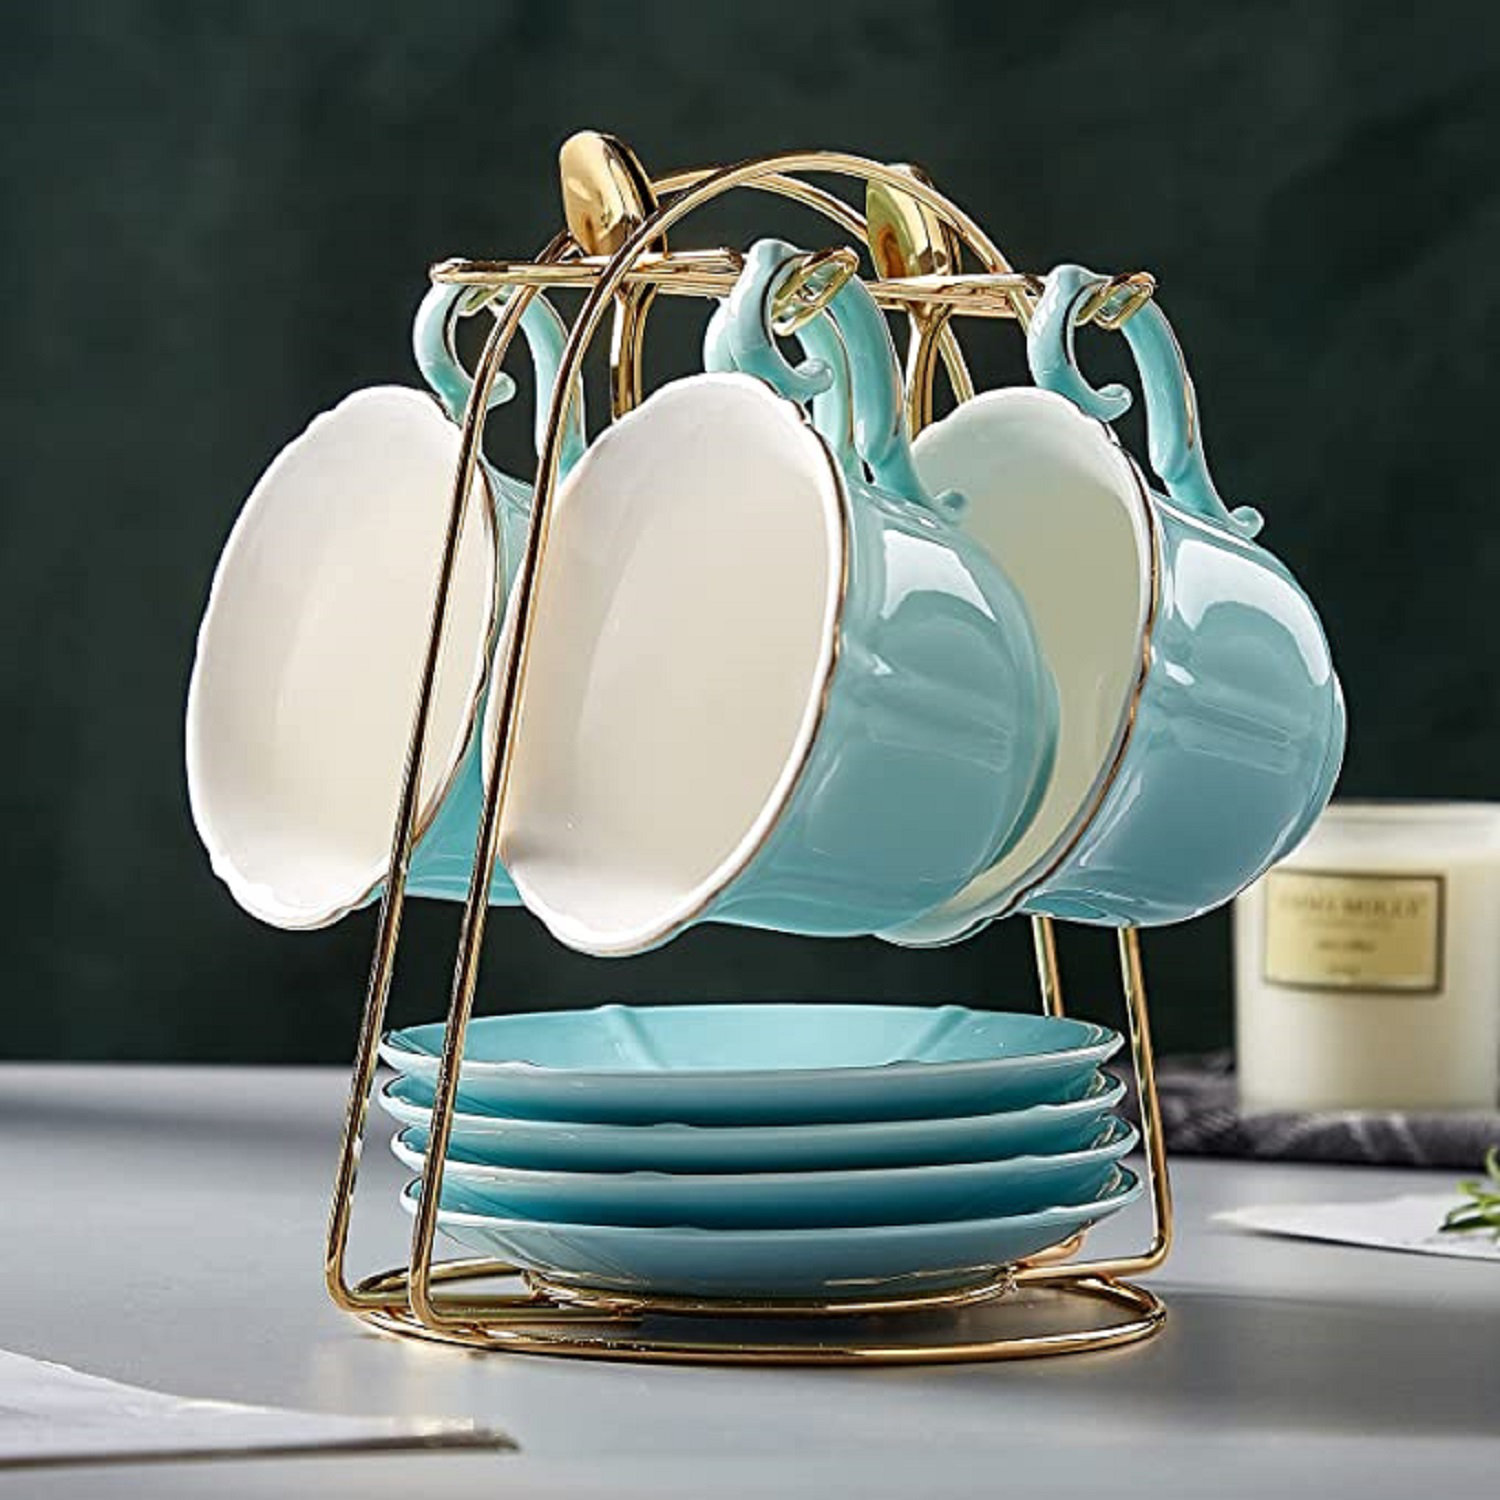 Reviews for MALACASA Porcelain Tea Pot Set for One 11 Ounce Teapot 1 Piece  Teacup and Saucer Set